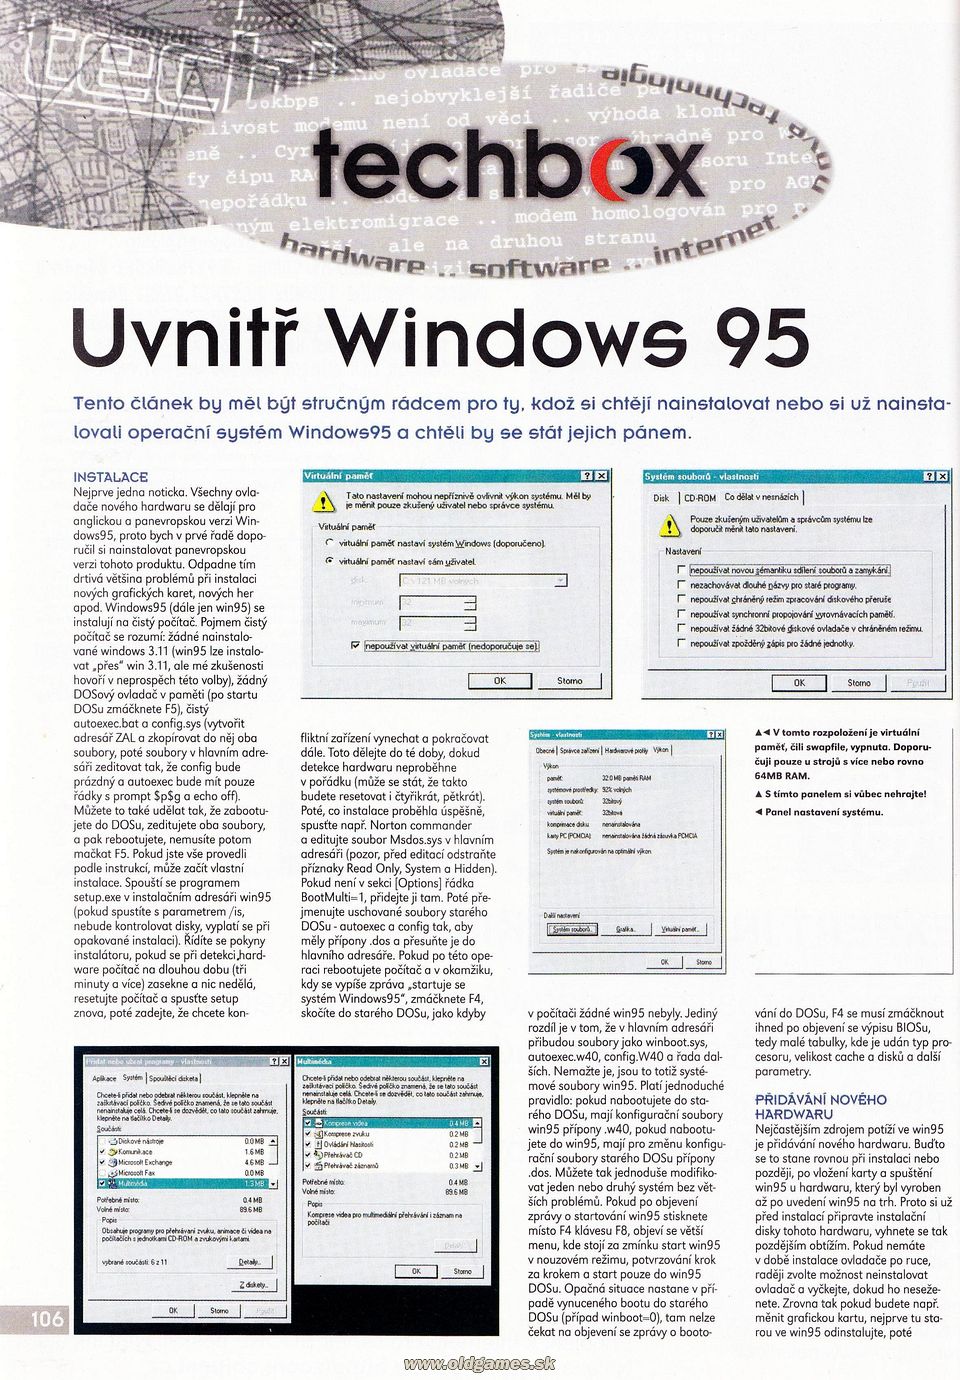 Uvnitř Windows 95